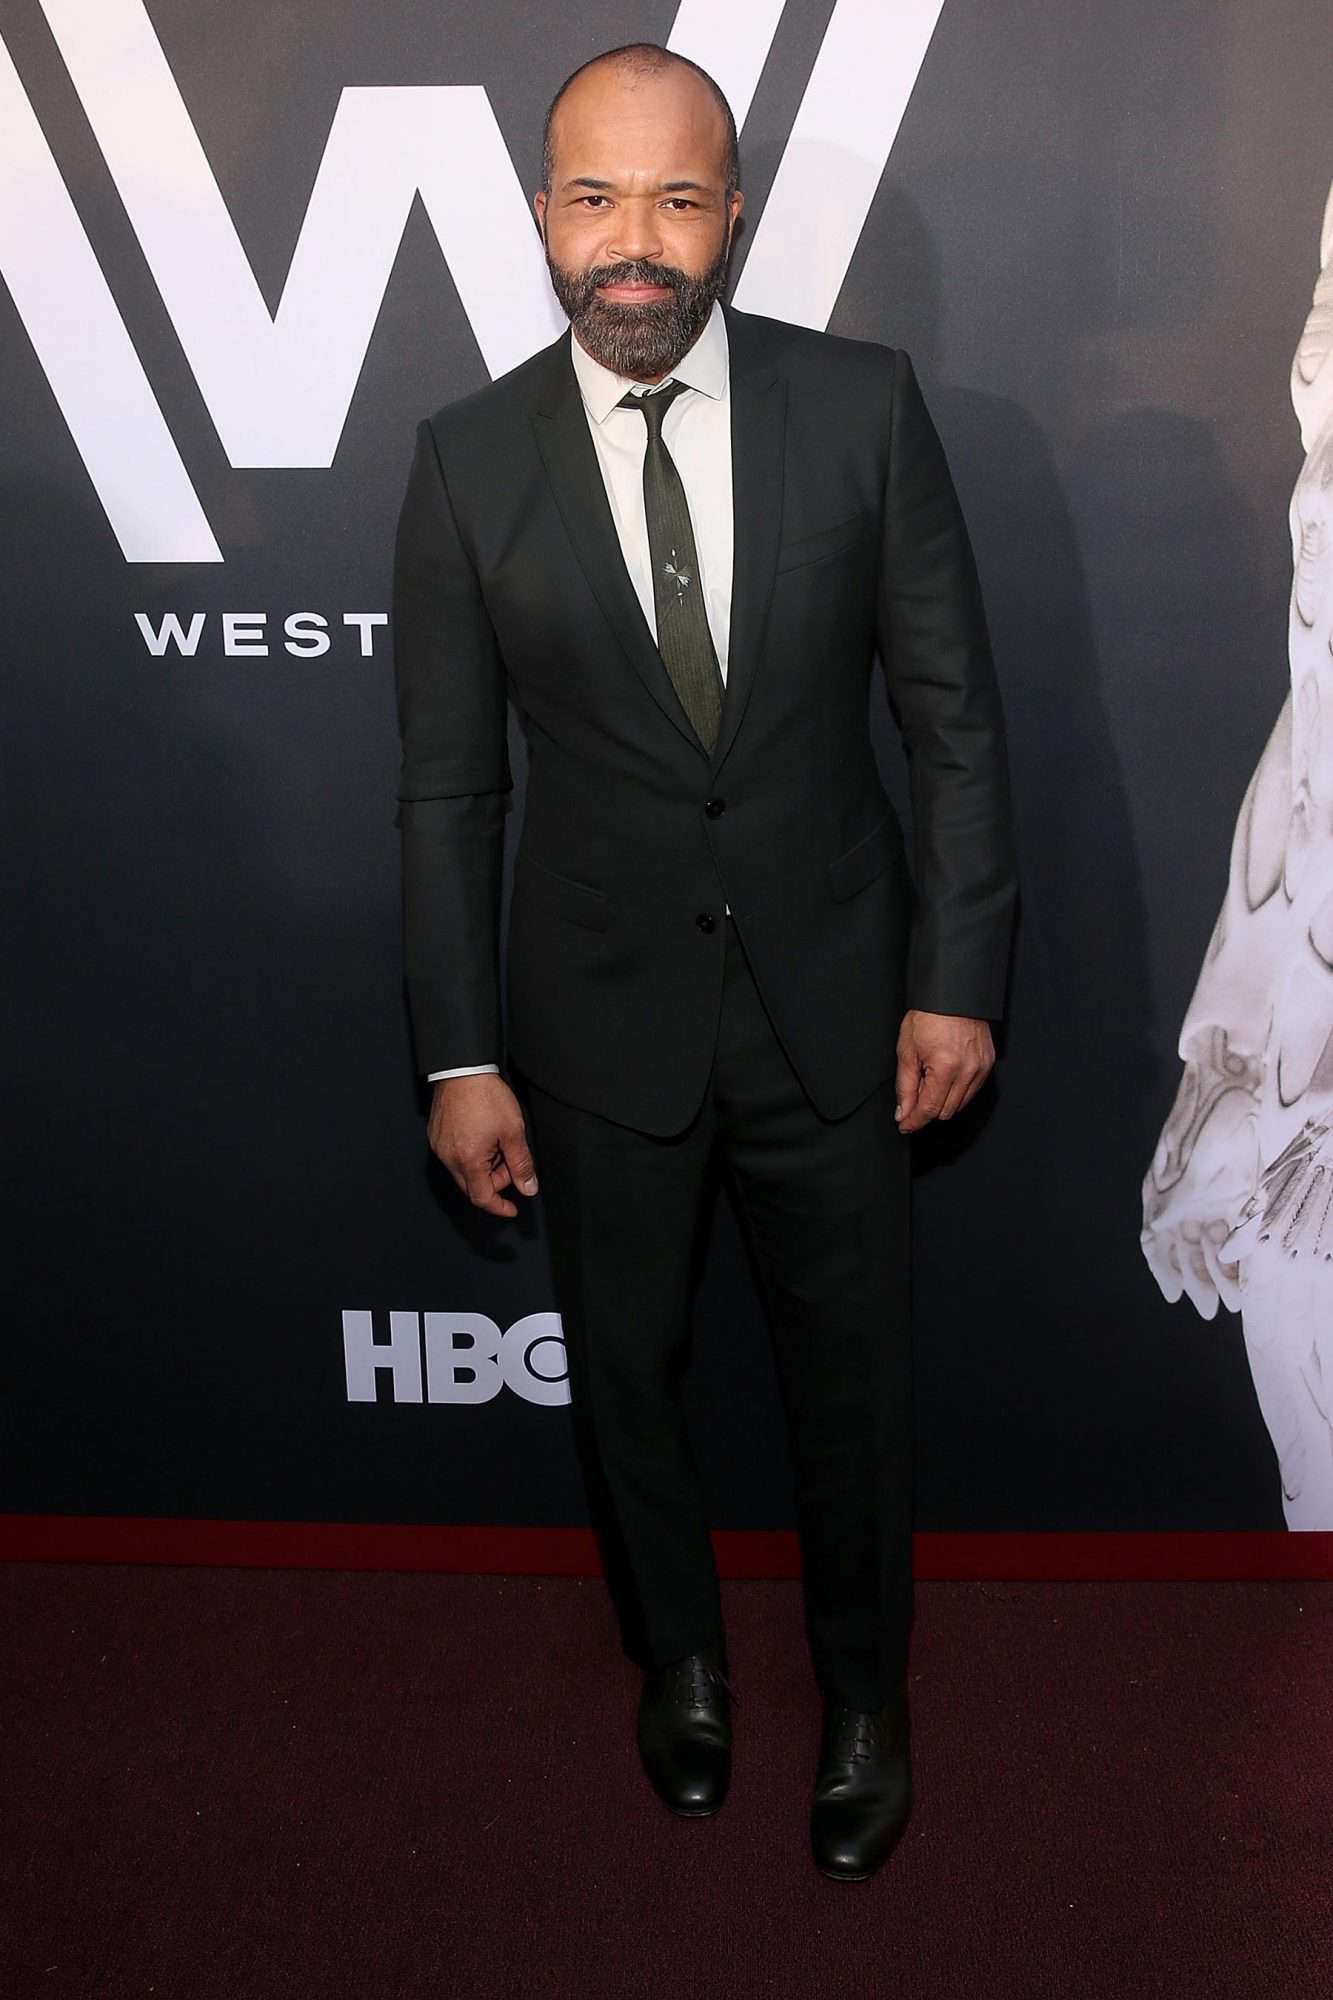 Premiere Of HBO's "Westworld" Season 2 - Red Carpet